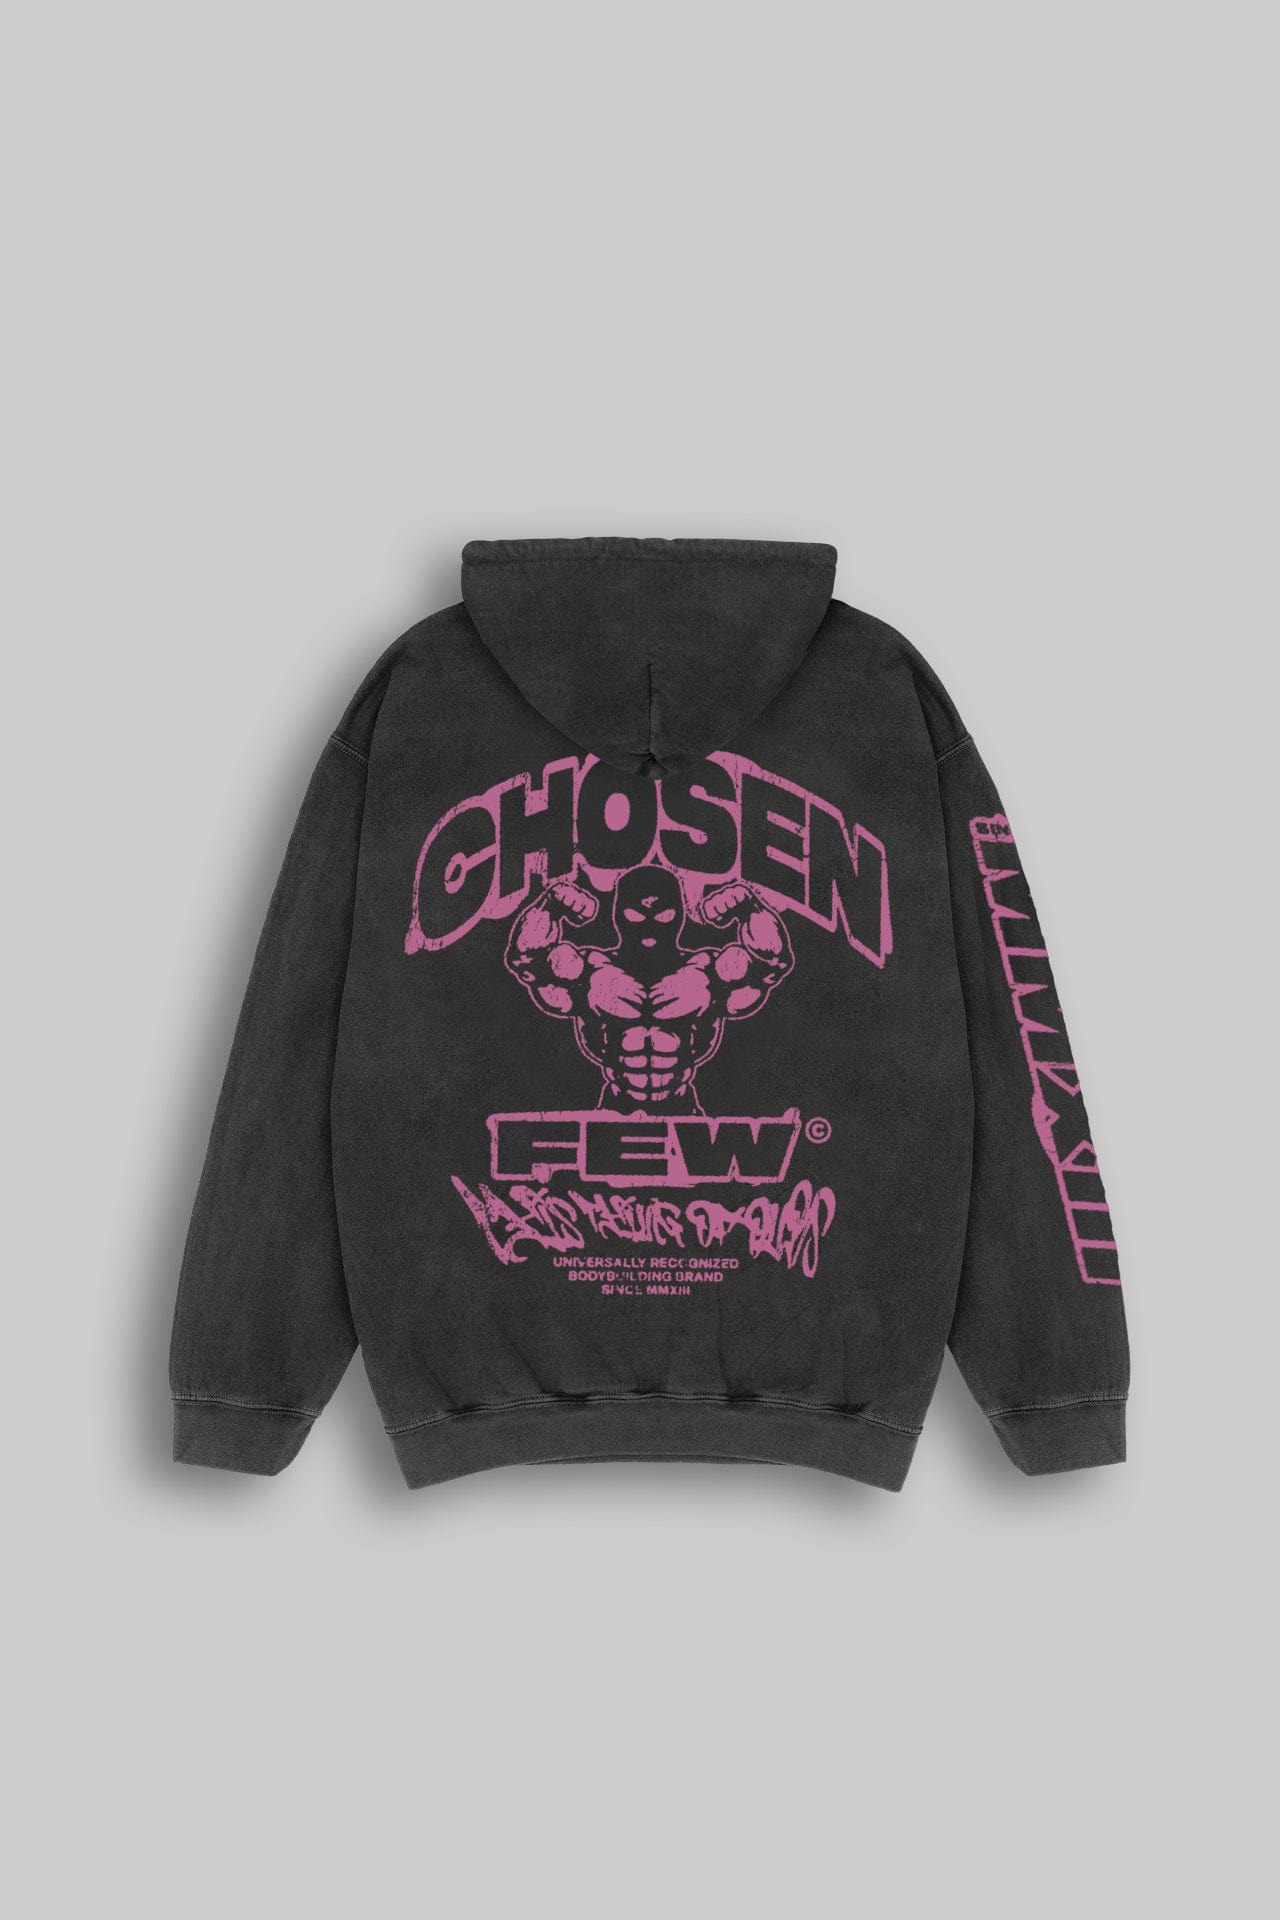 G Gym Street Edition Hoodie Retro Charcoal Black & Pink